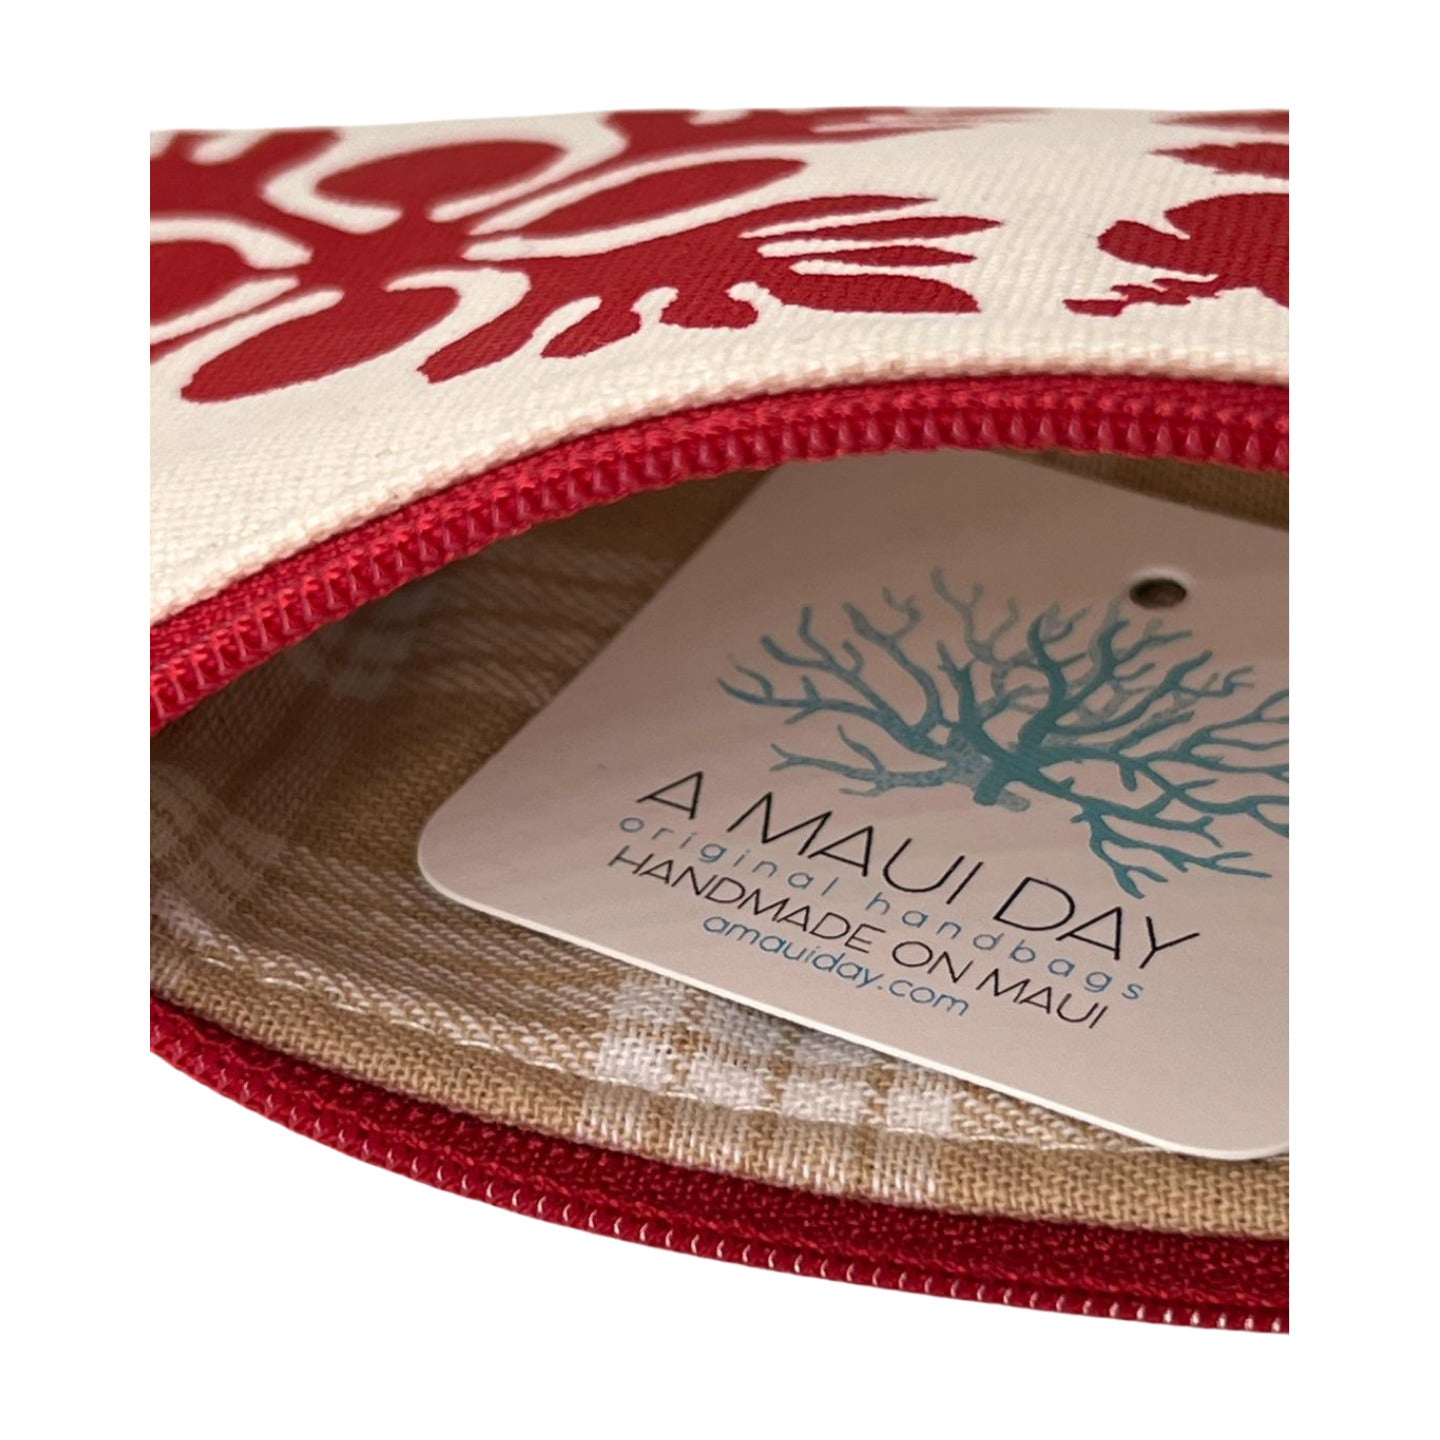 Pop-Up Mākeke - A Maui Day Original Handbags - Handprinted Mini Handbag - Red Quilt on Canvas - Inside